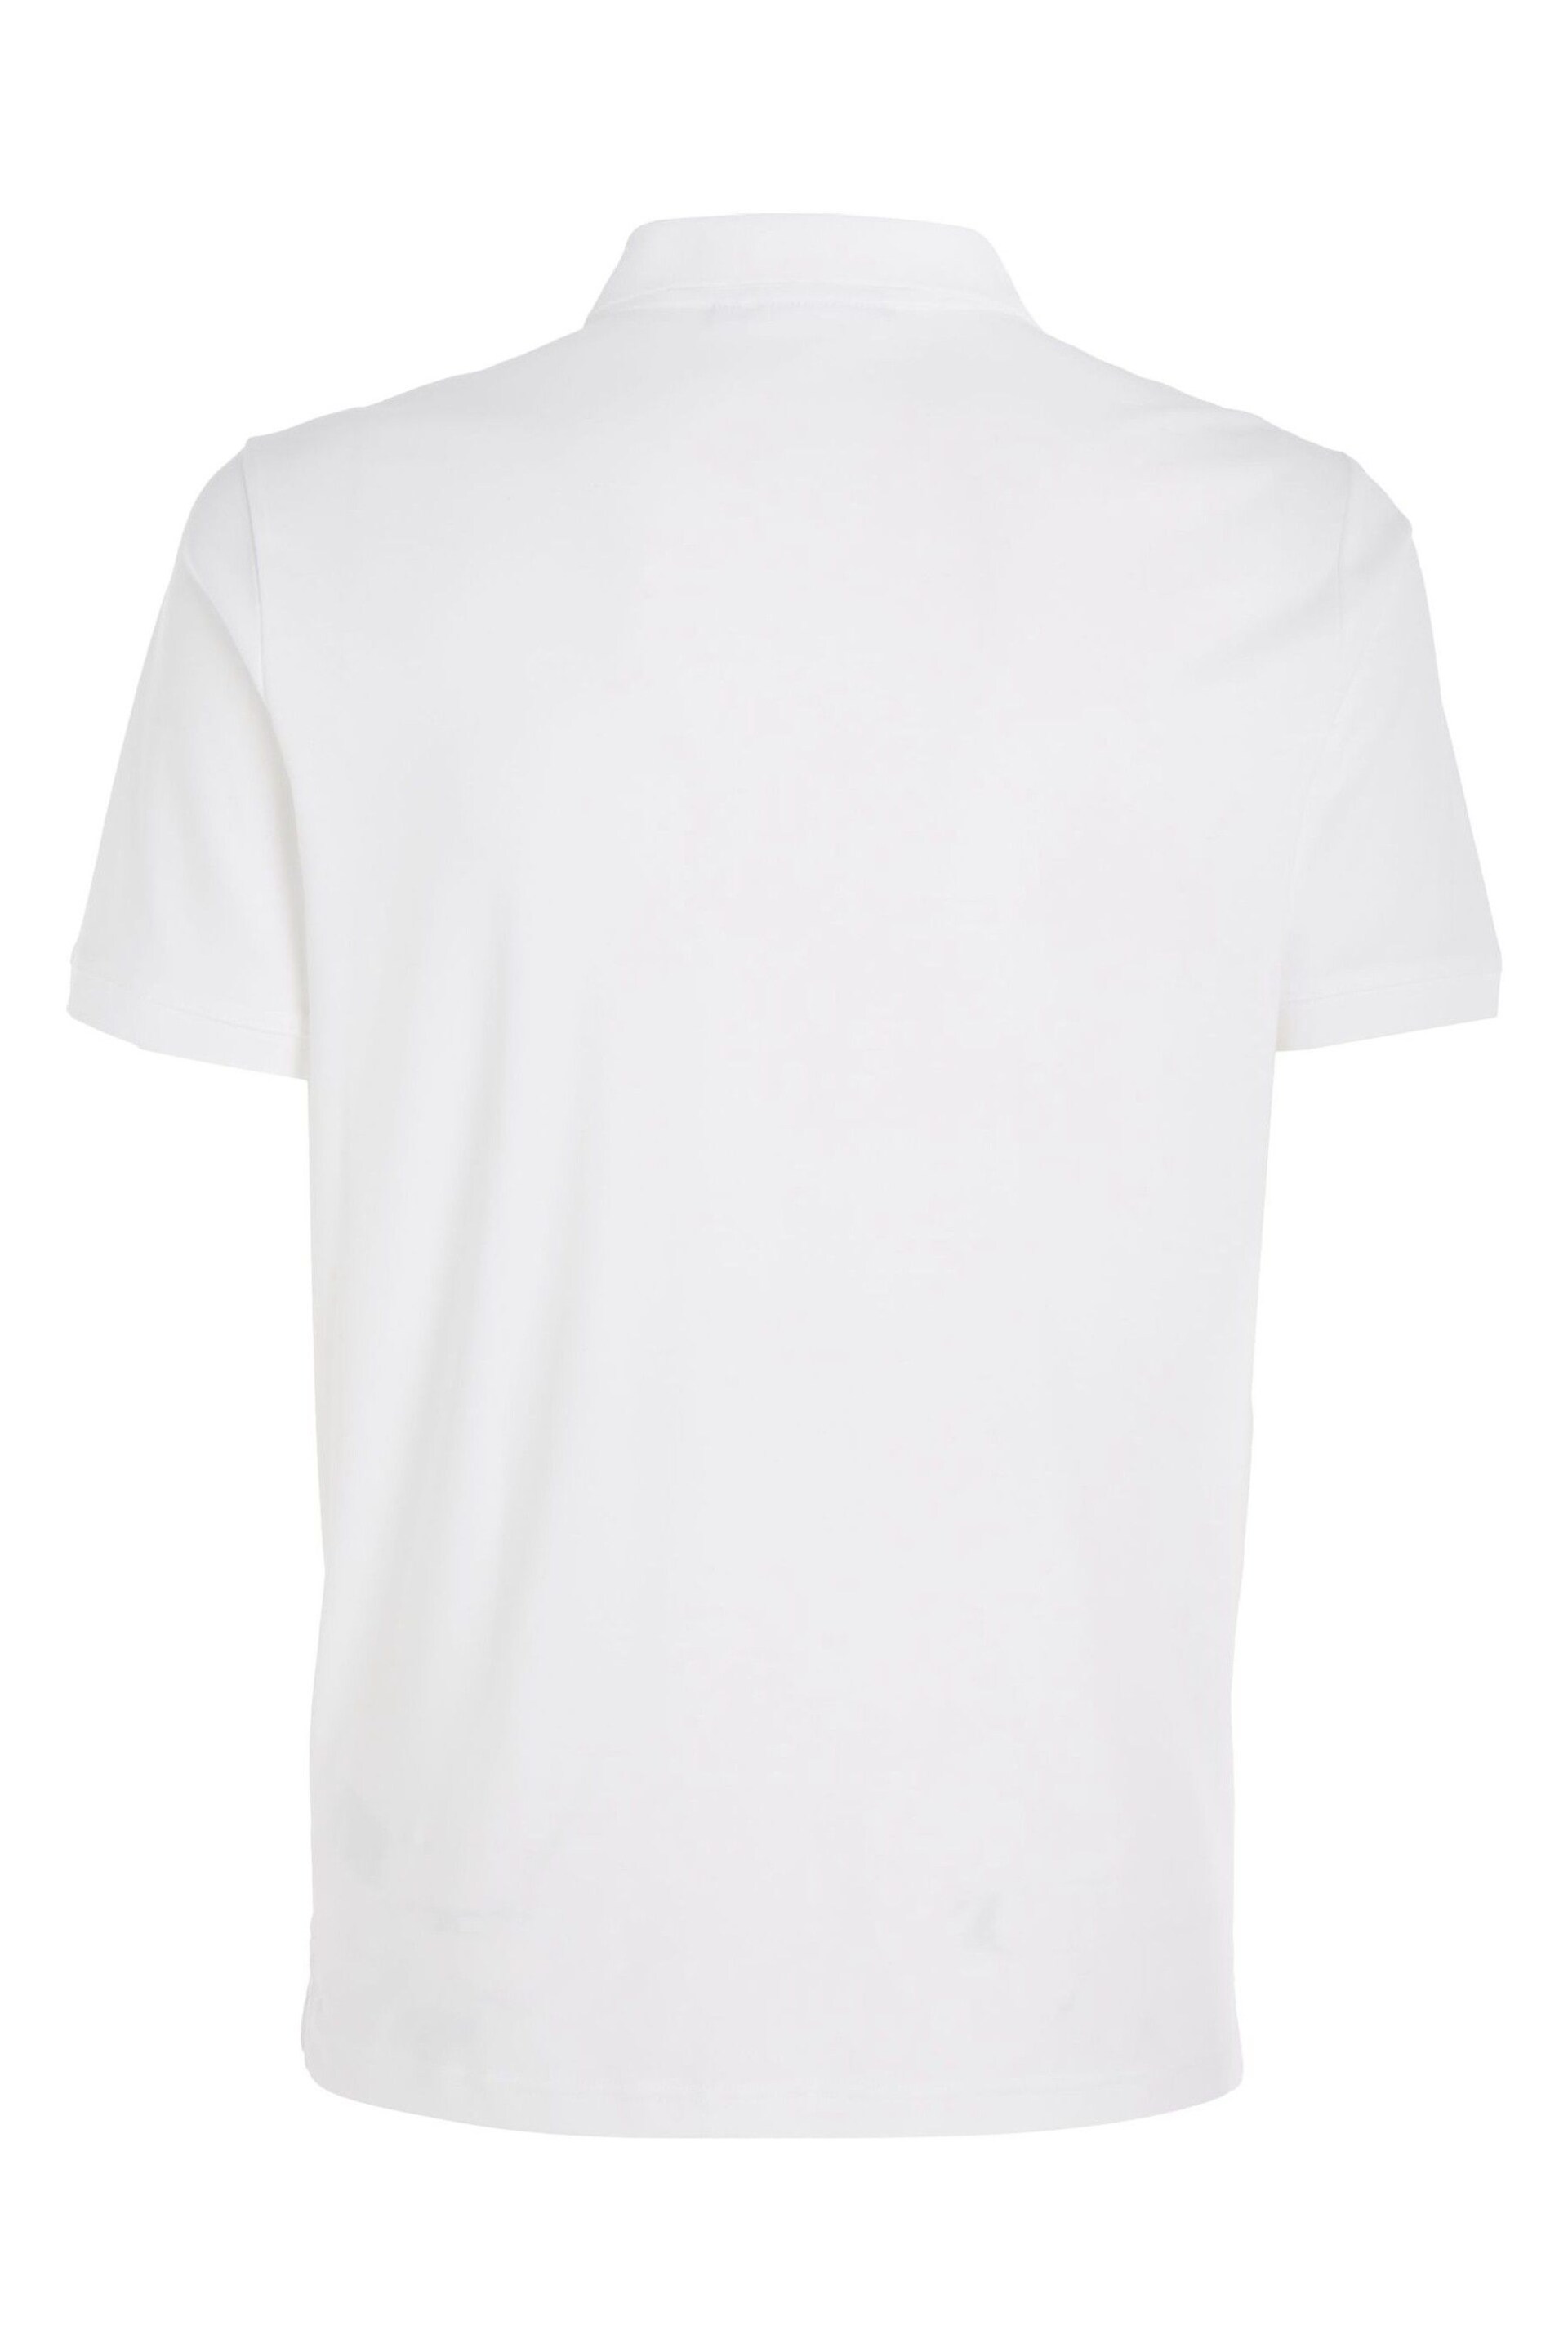 Calvin Klein White Slim Essential Smooth Cotton Polo Shirt - Image 5 of 5